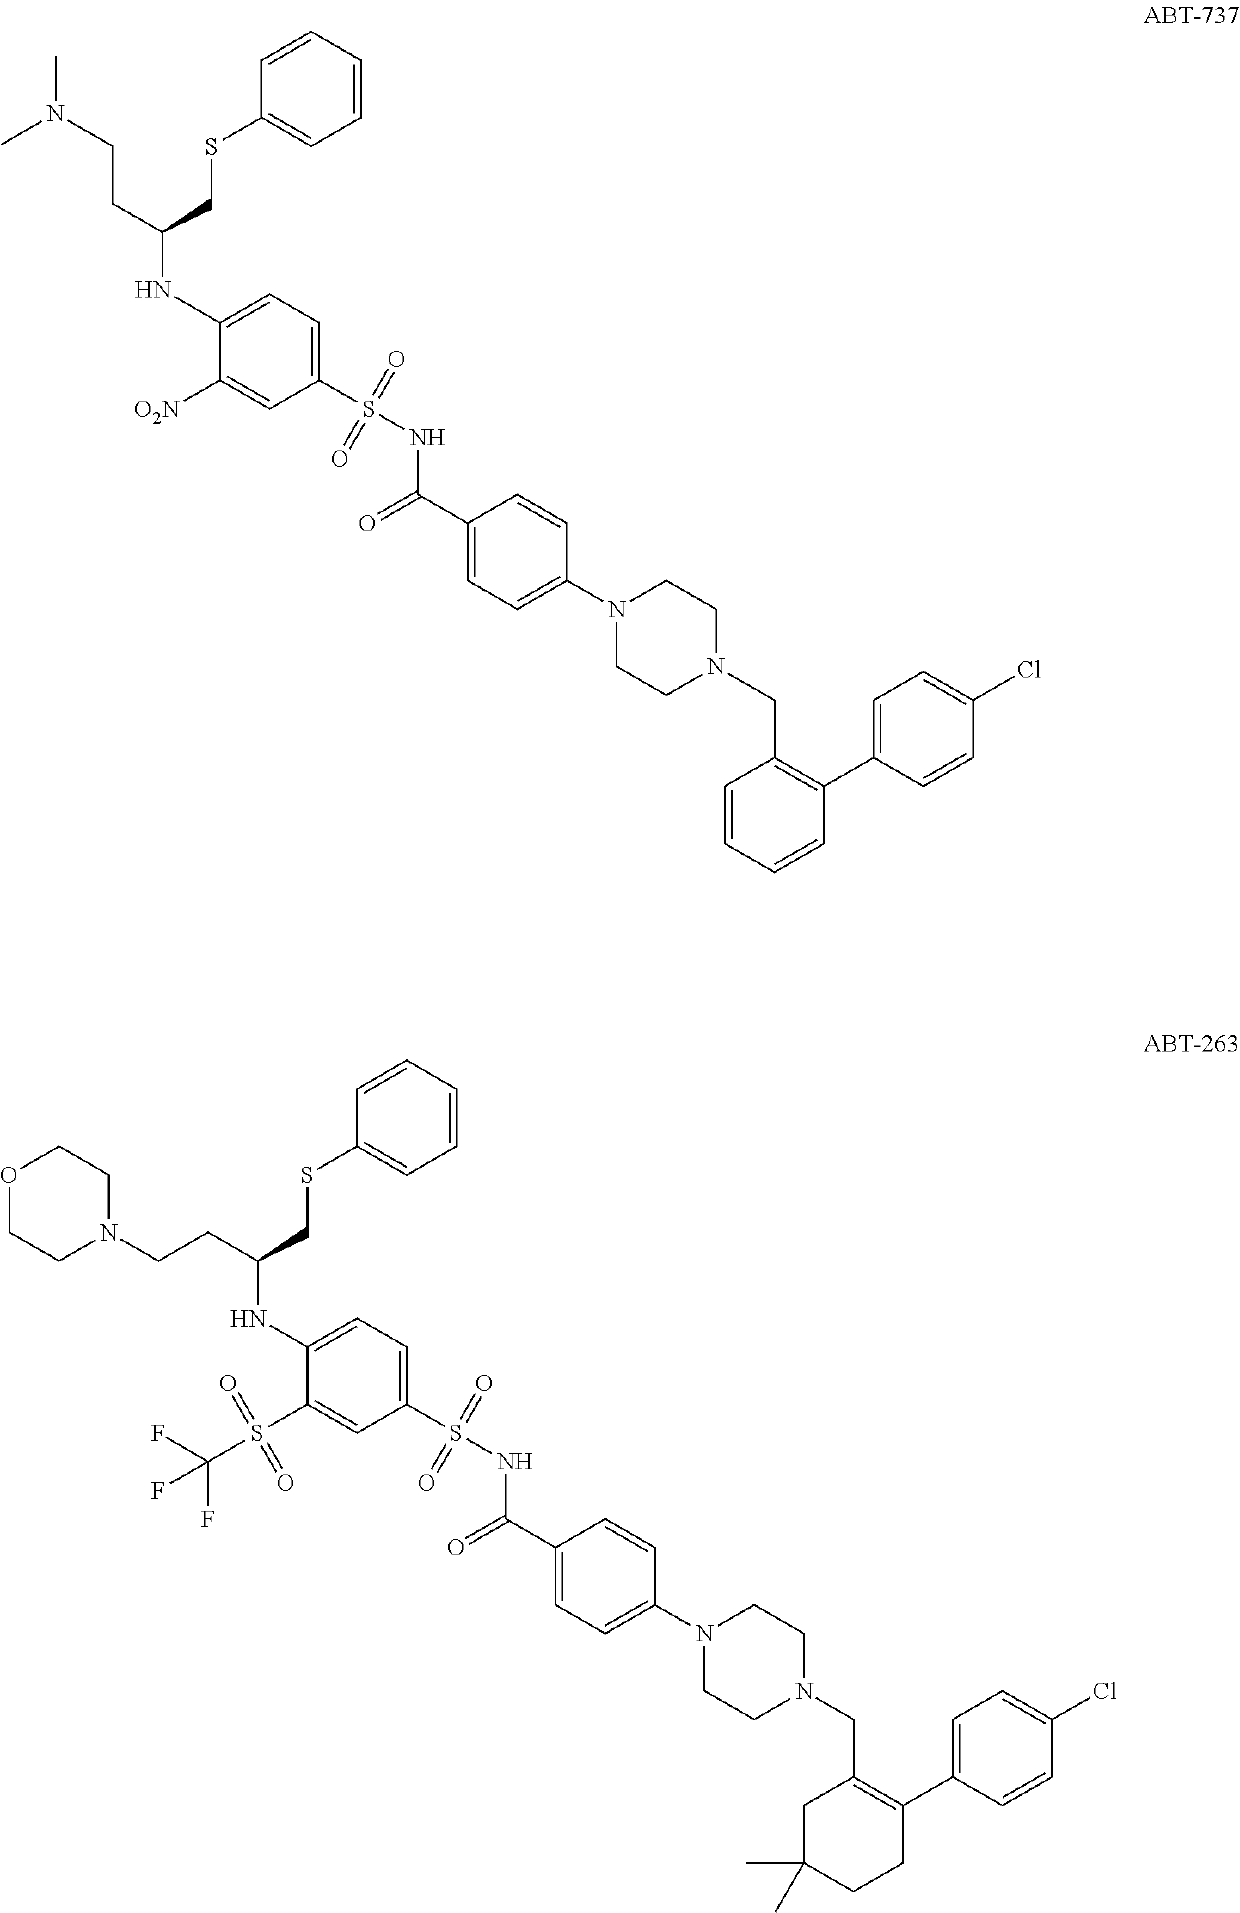 BCL-2 inhibitors